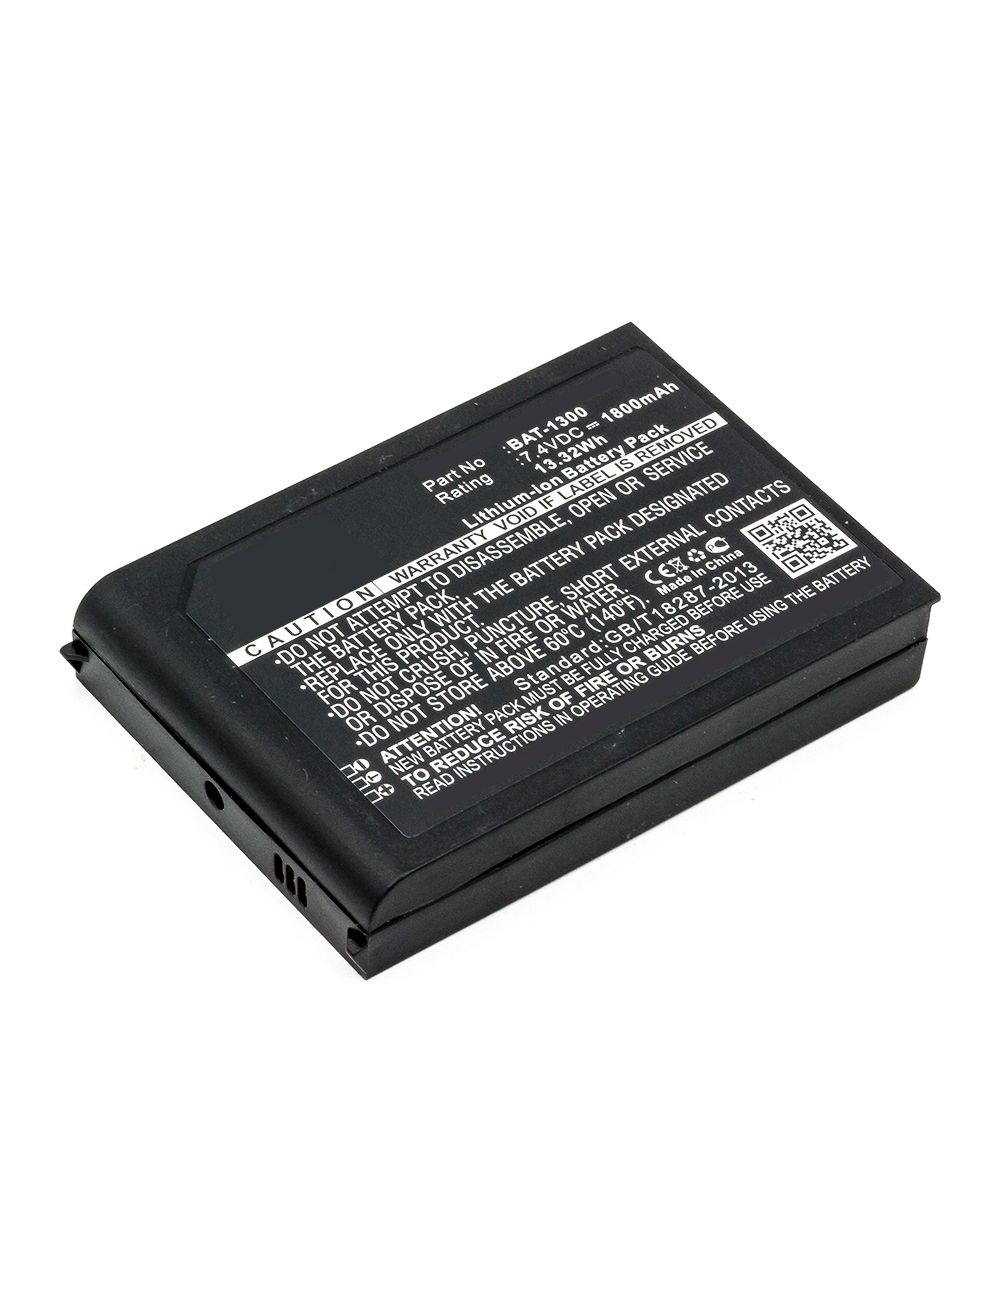 Batería compatible para Bluebird Pidion BIP-1300. BAT-1300 7,4V 1800mAh 13,32Wh - AB-BAT1300 -  - 4894128124238 - 1